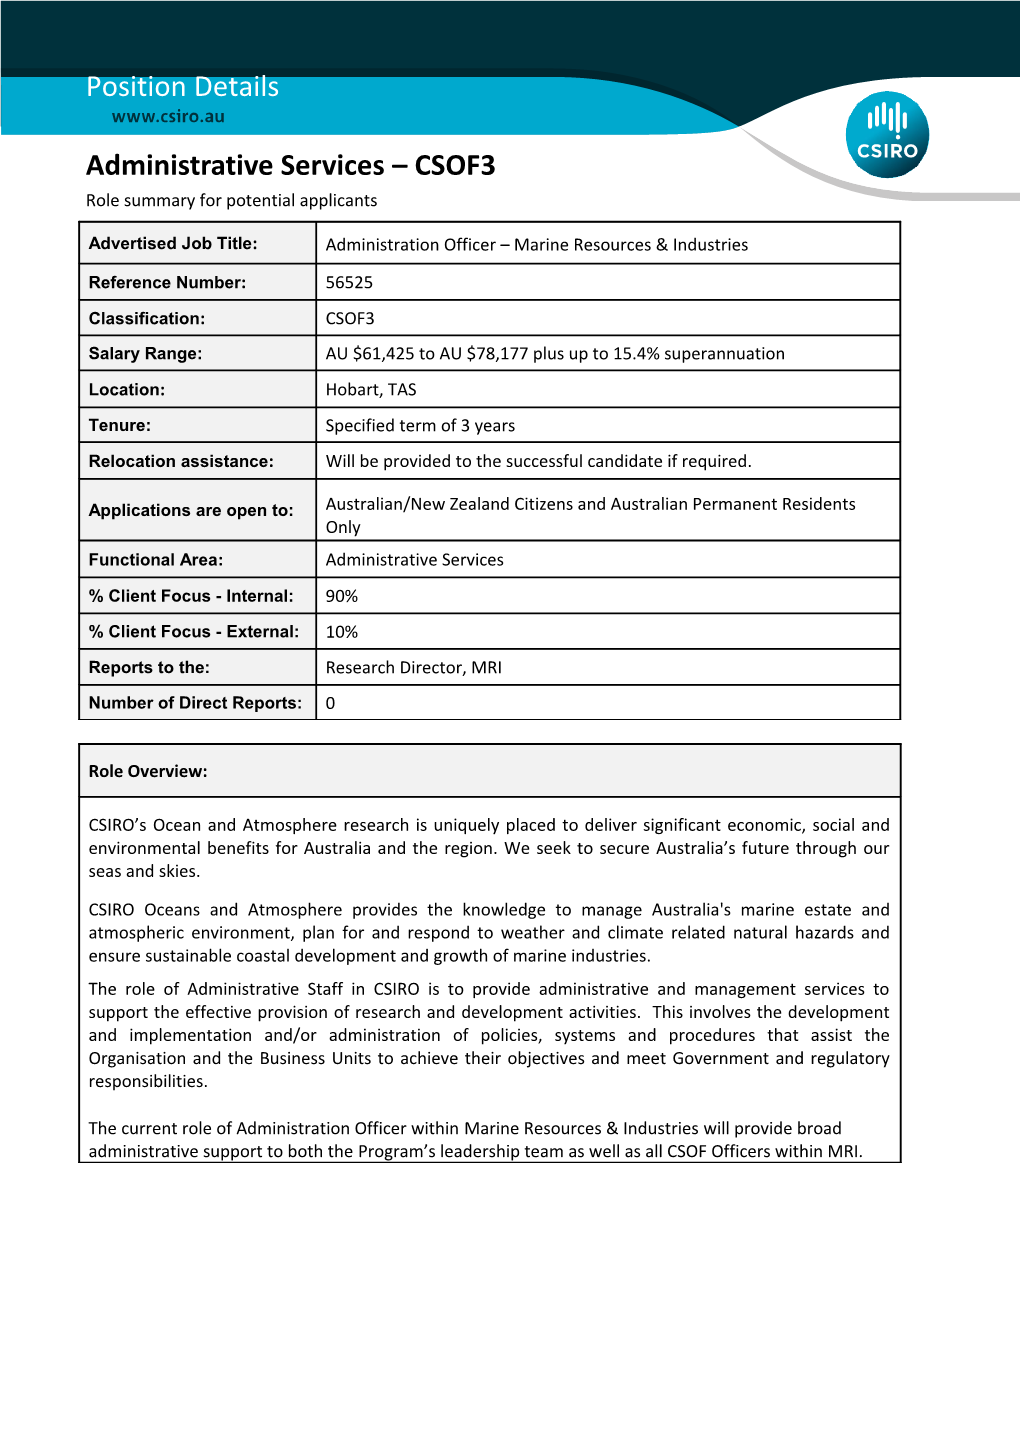 Position Details - Administrative Services - CSOF3